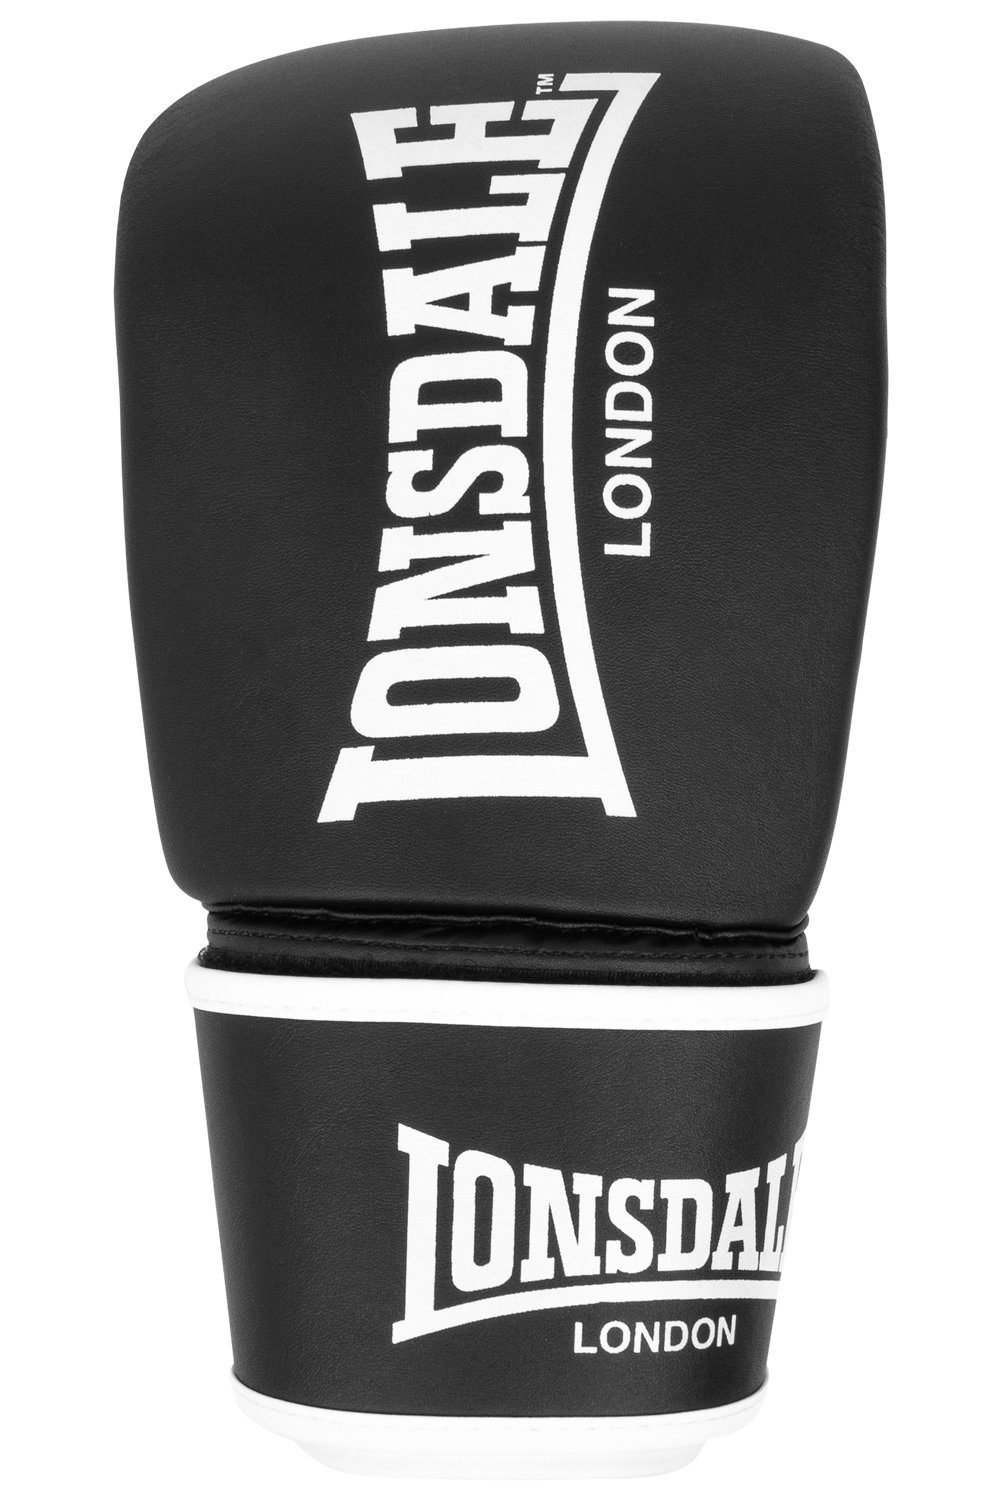 Lonsdale Boxhandschuhe BARLEY Black/White